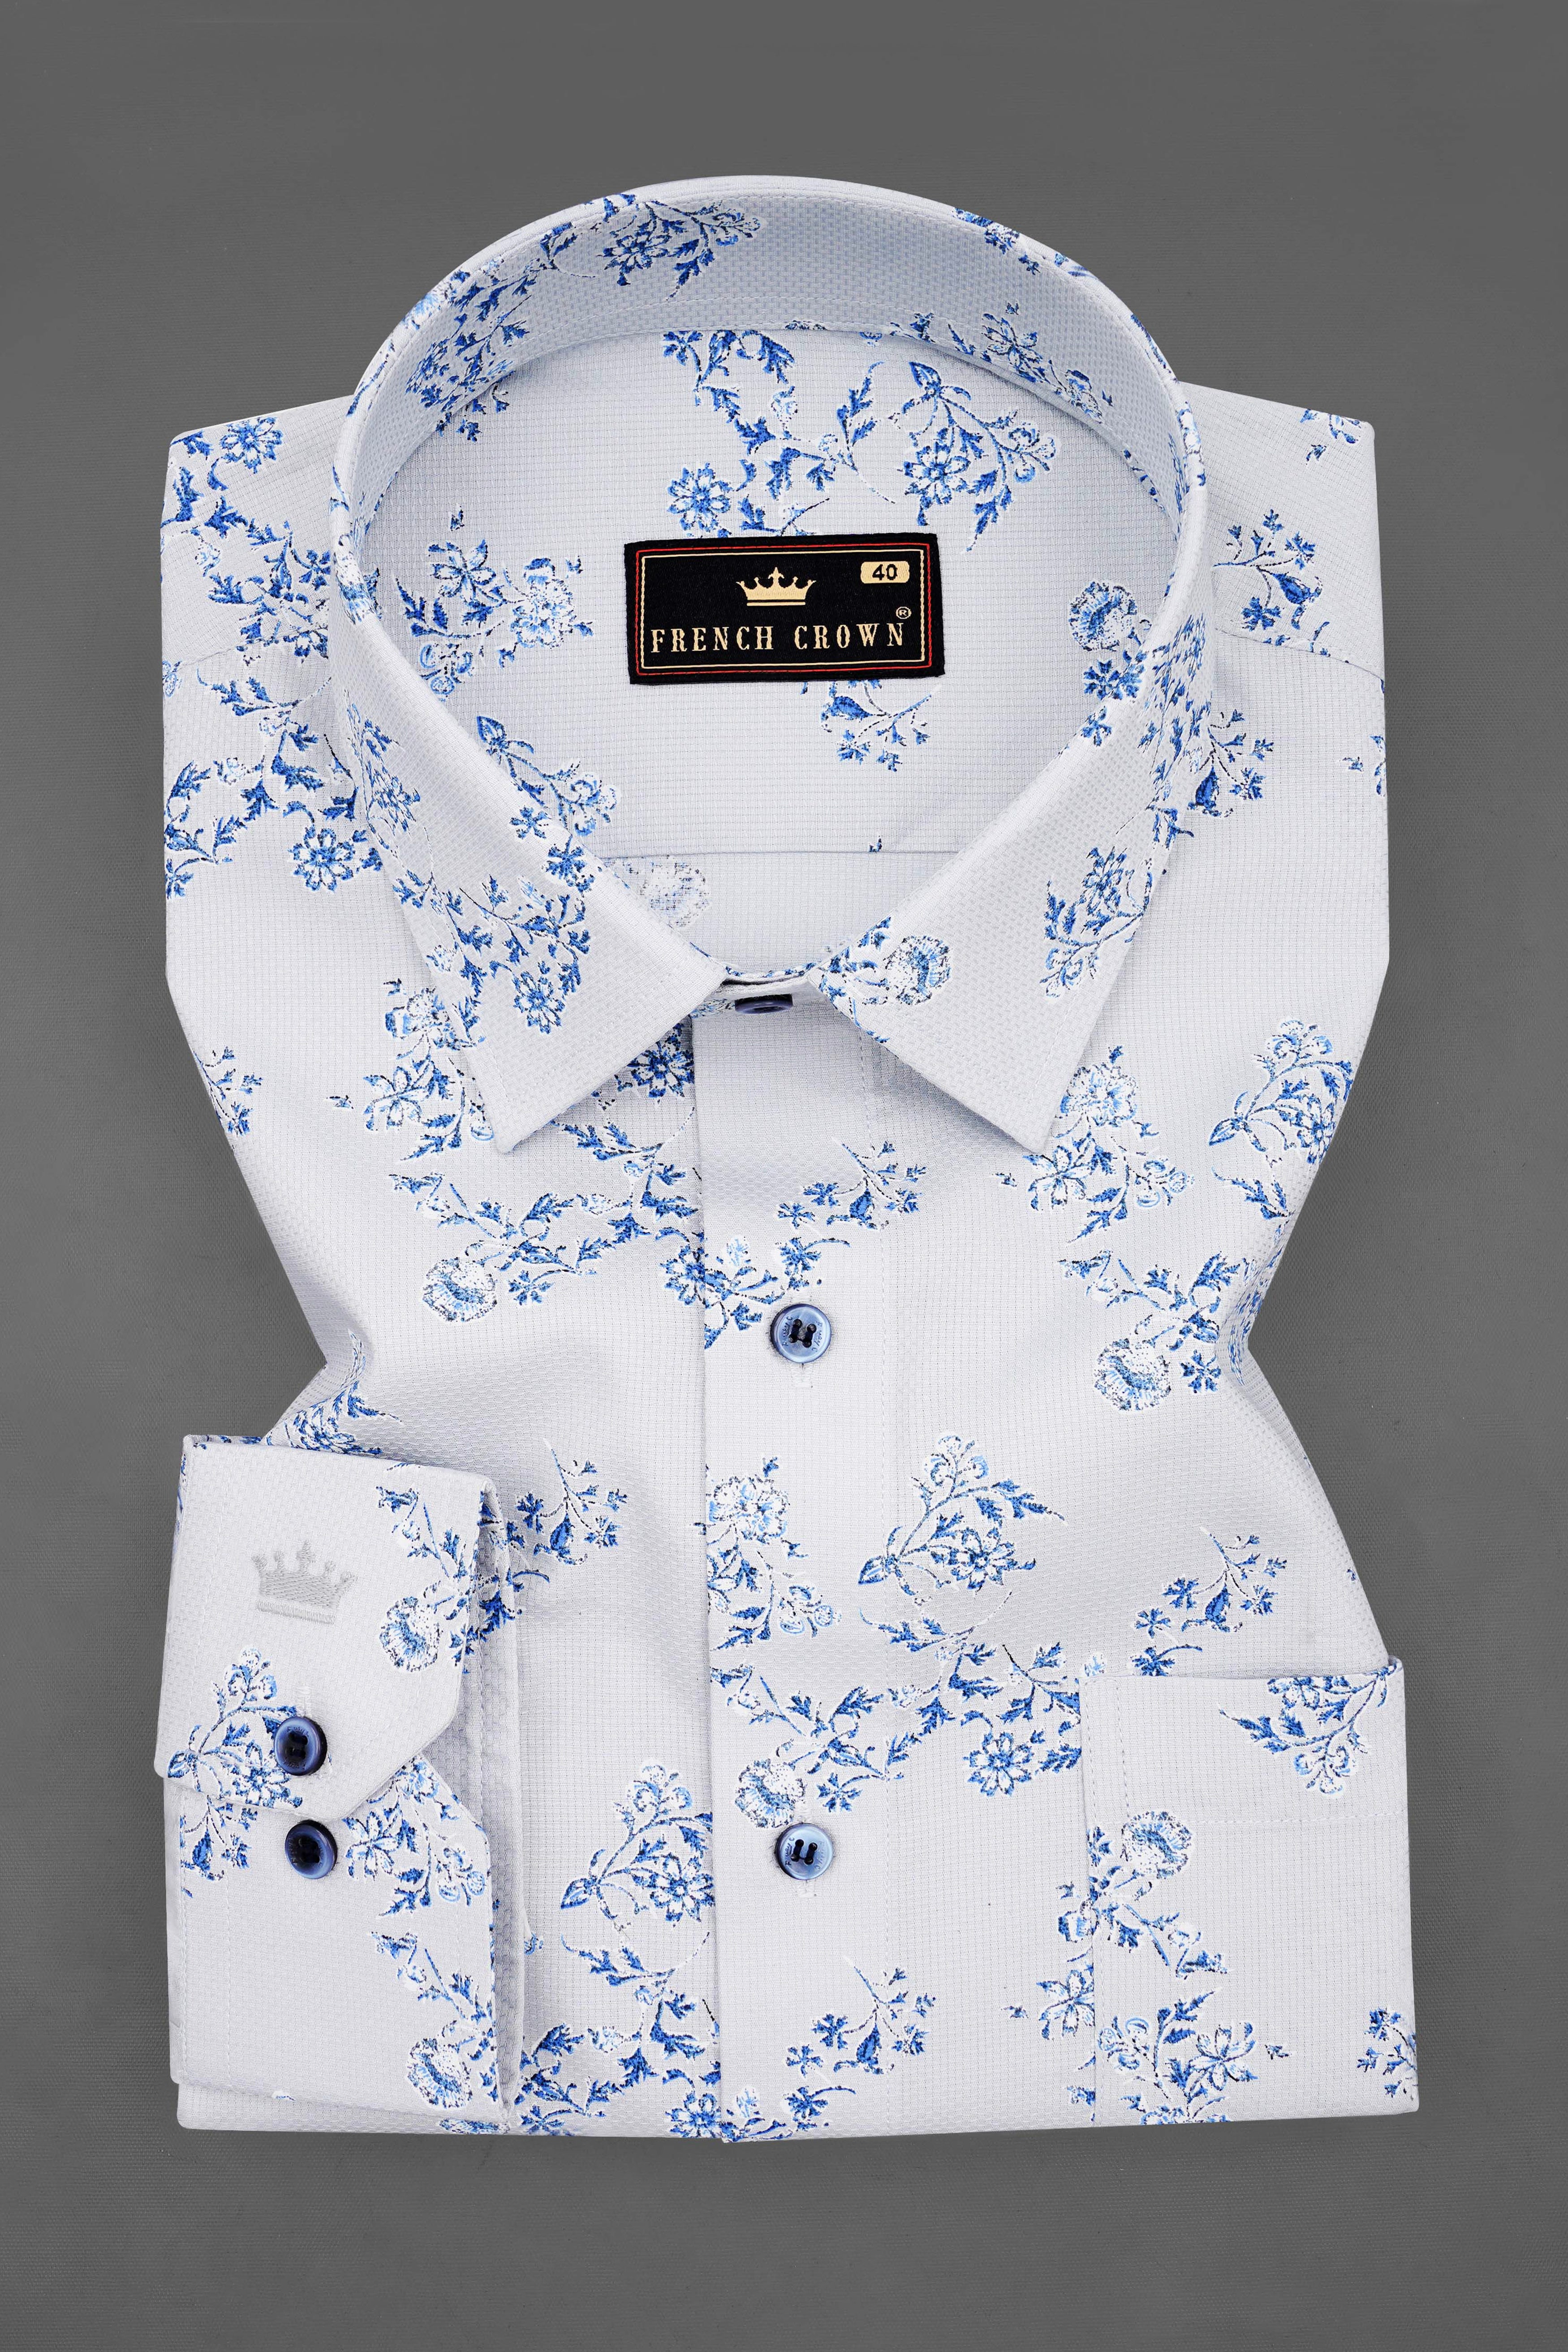 Zircon Grey and Celestial Blue Floral Print Dobby Textured Giza Cotton Shirt